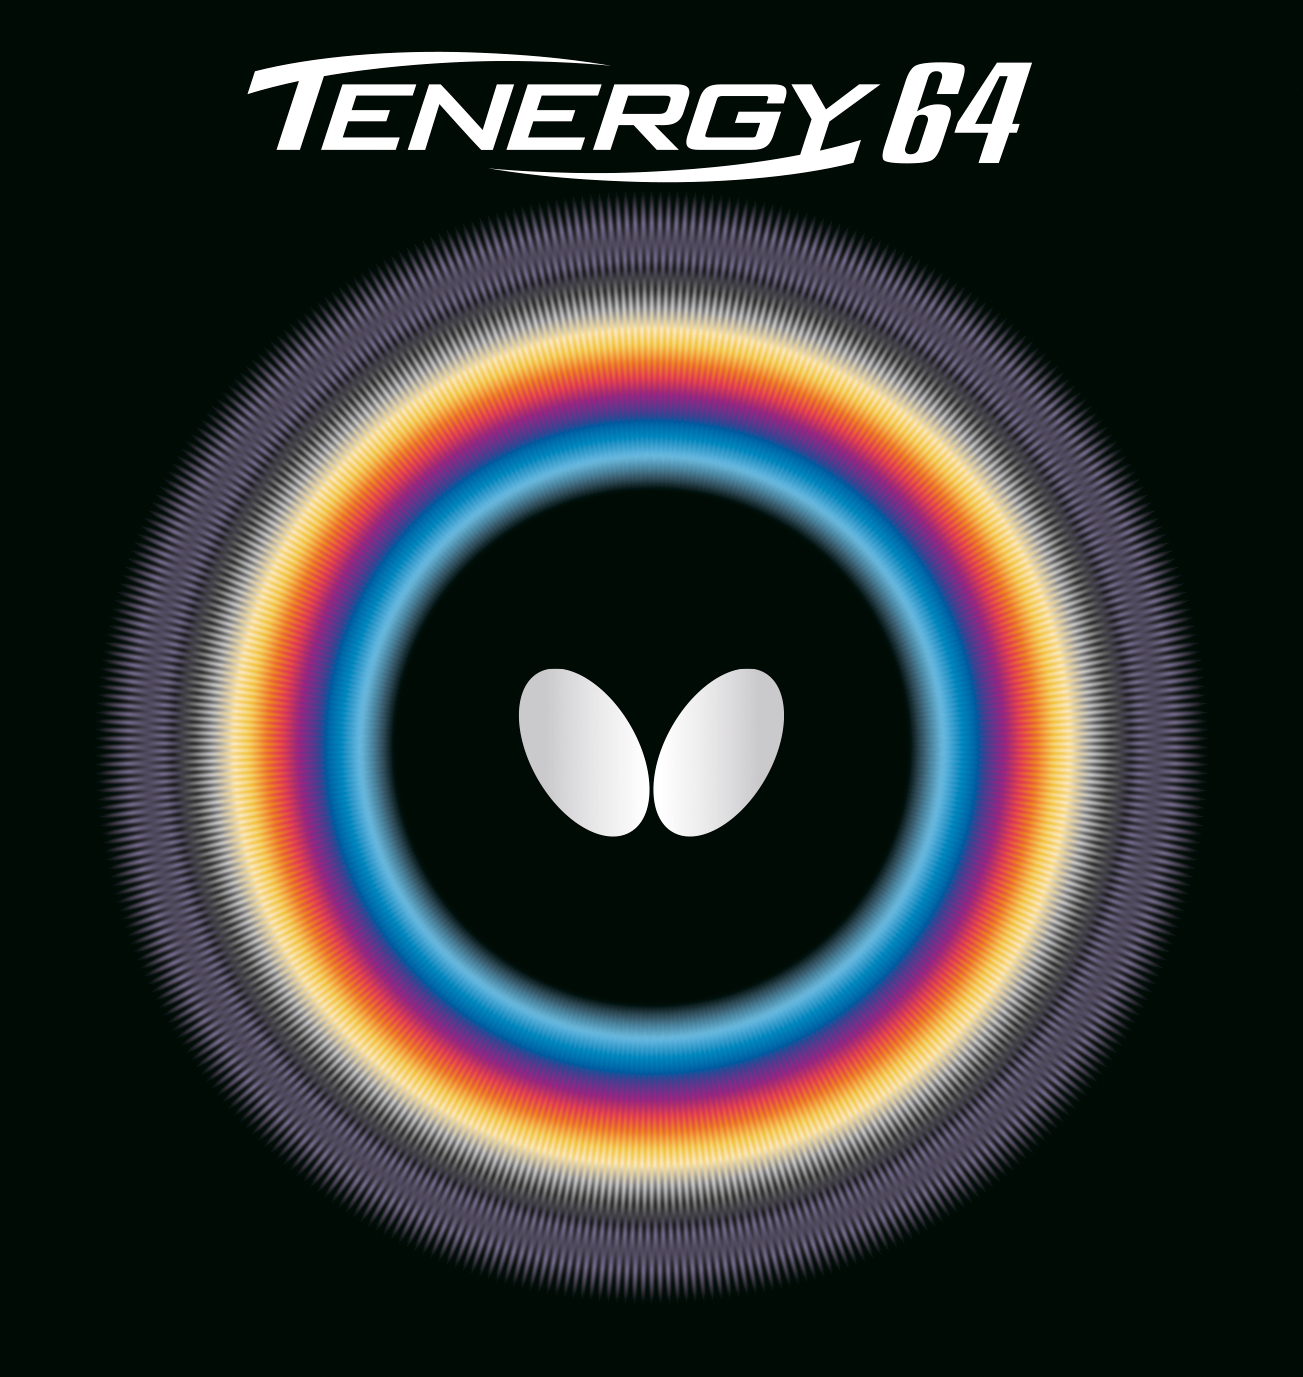 Butterfly - rubber Tenergy 64